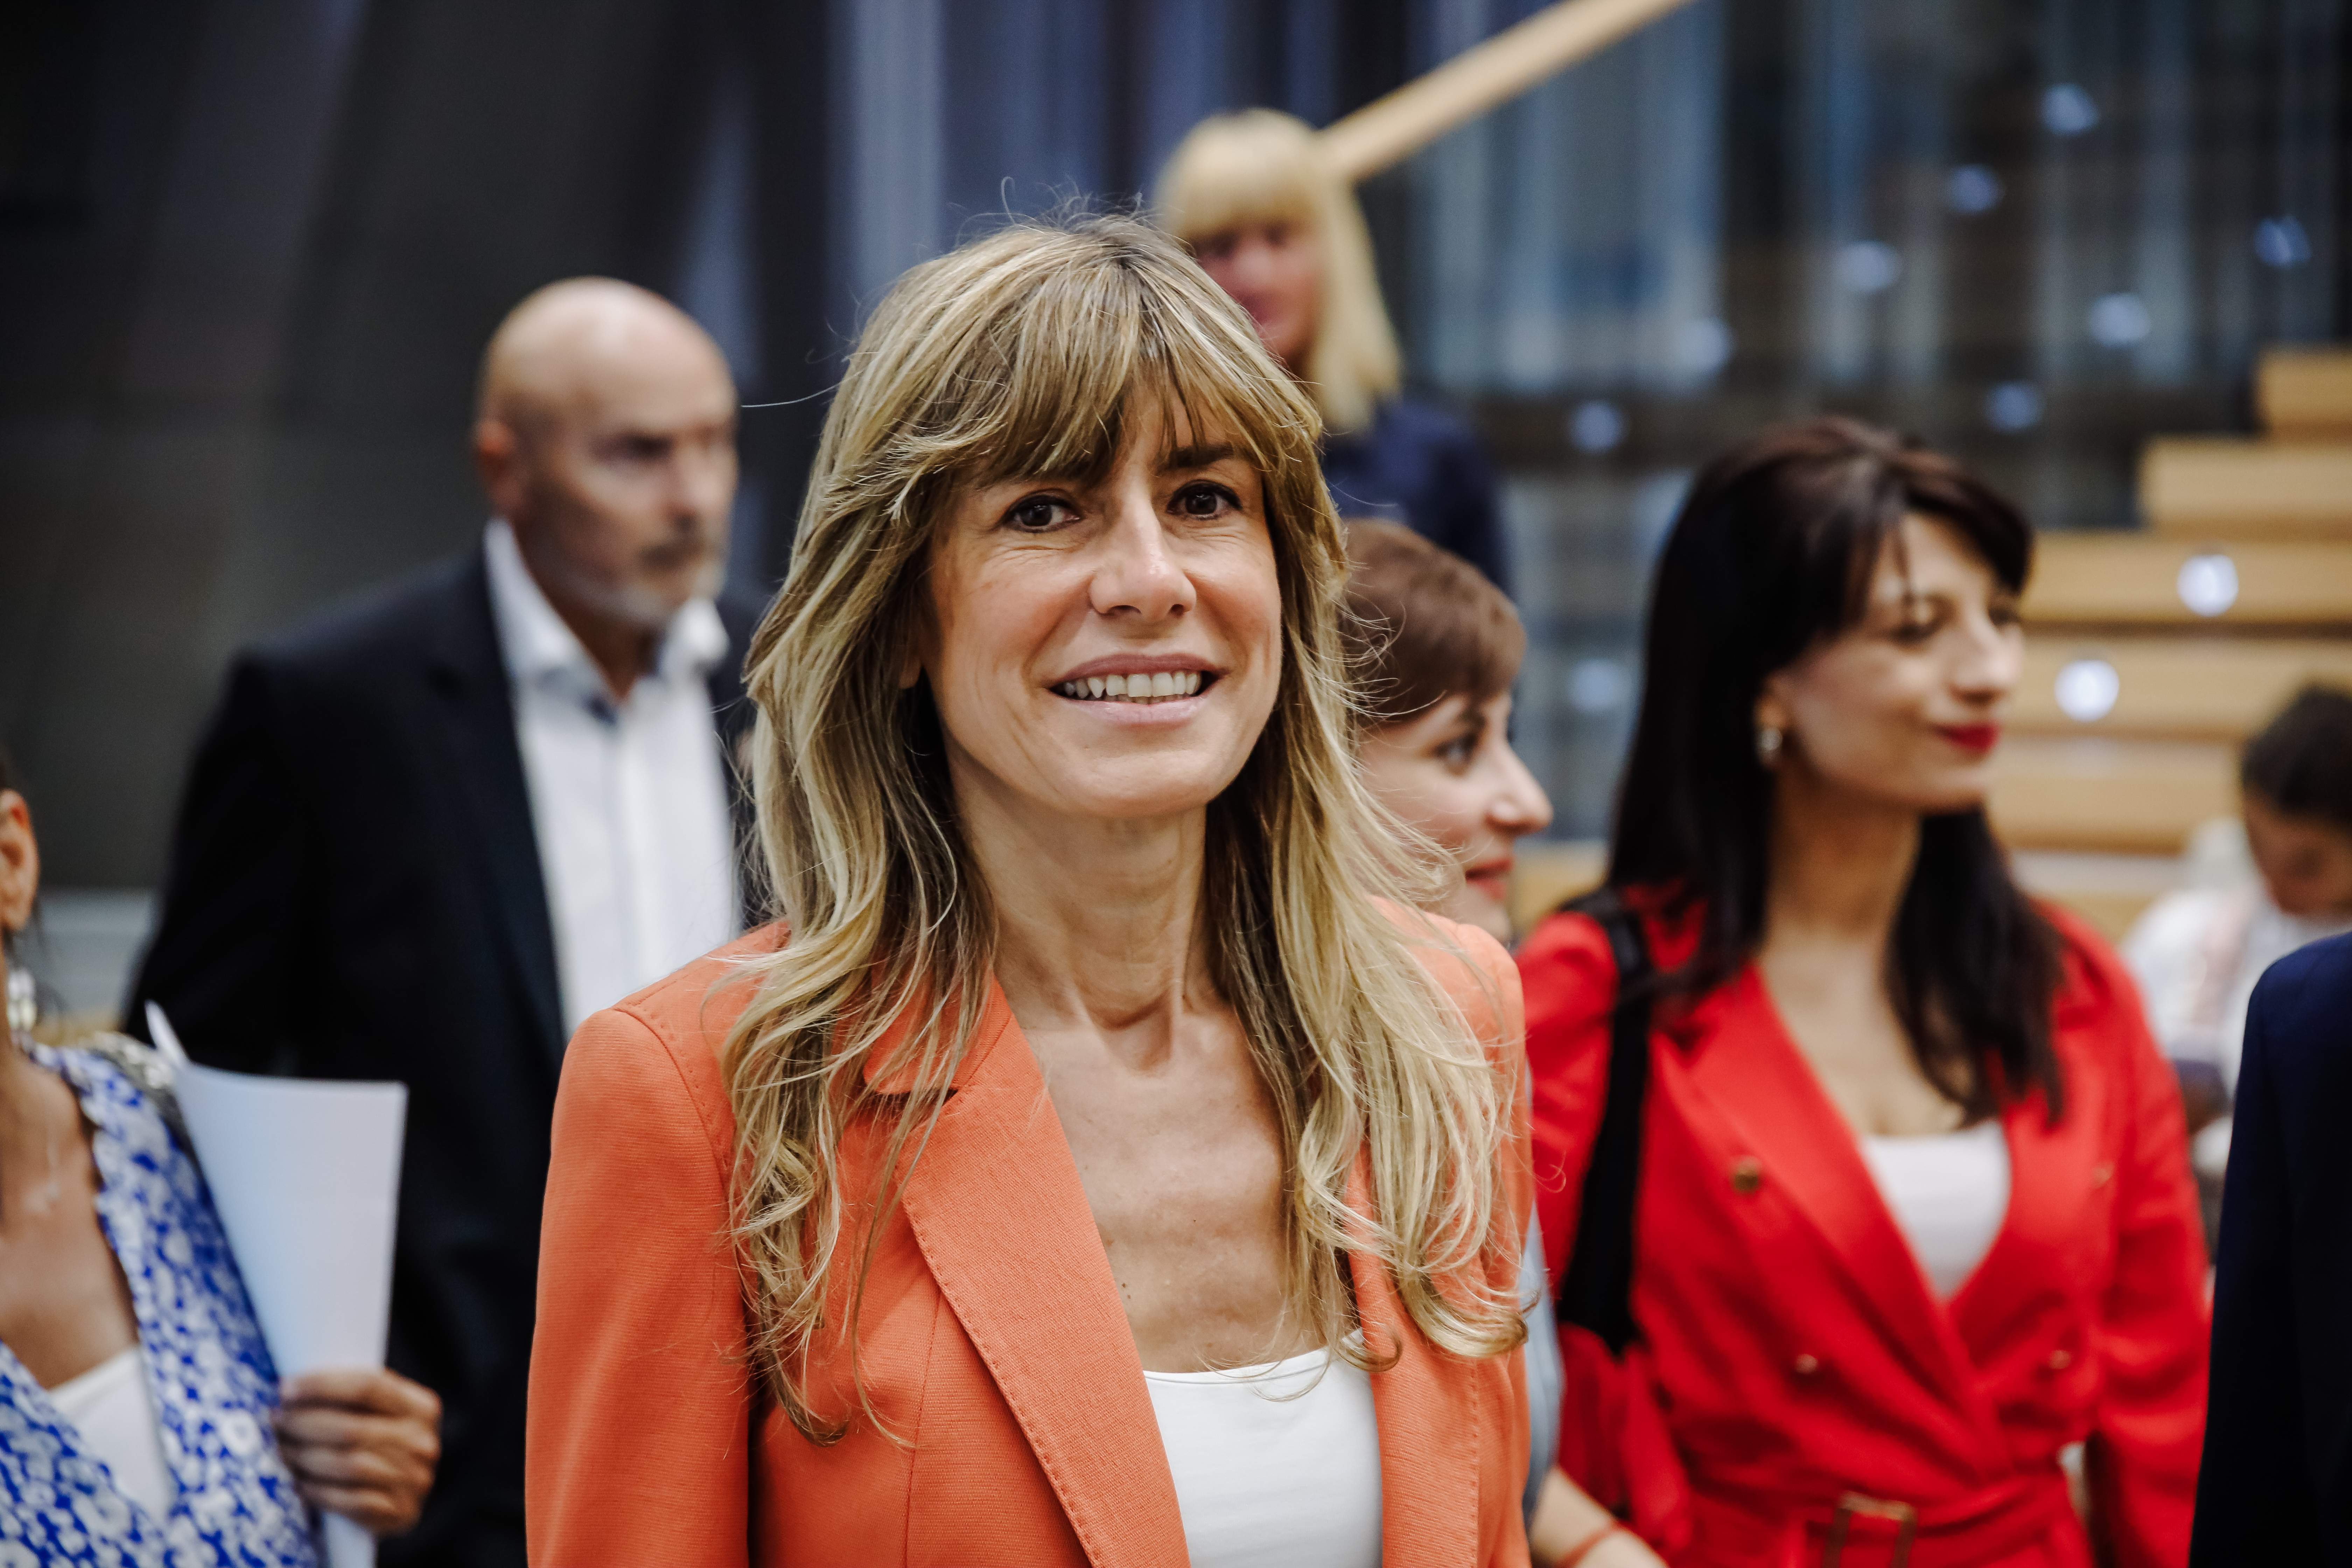 Madrid court opens corruption investigation into Begoña Gómez, wife of Pedro Sánchez